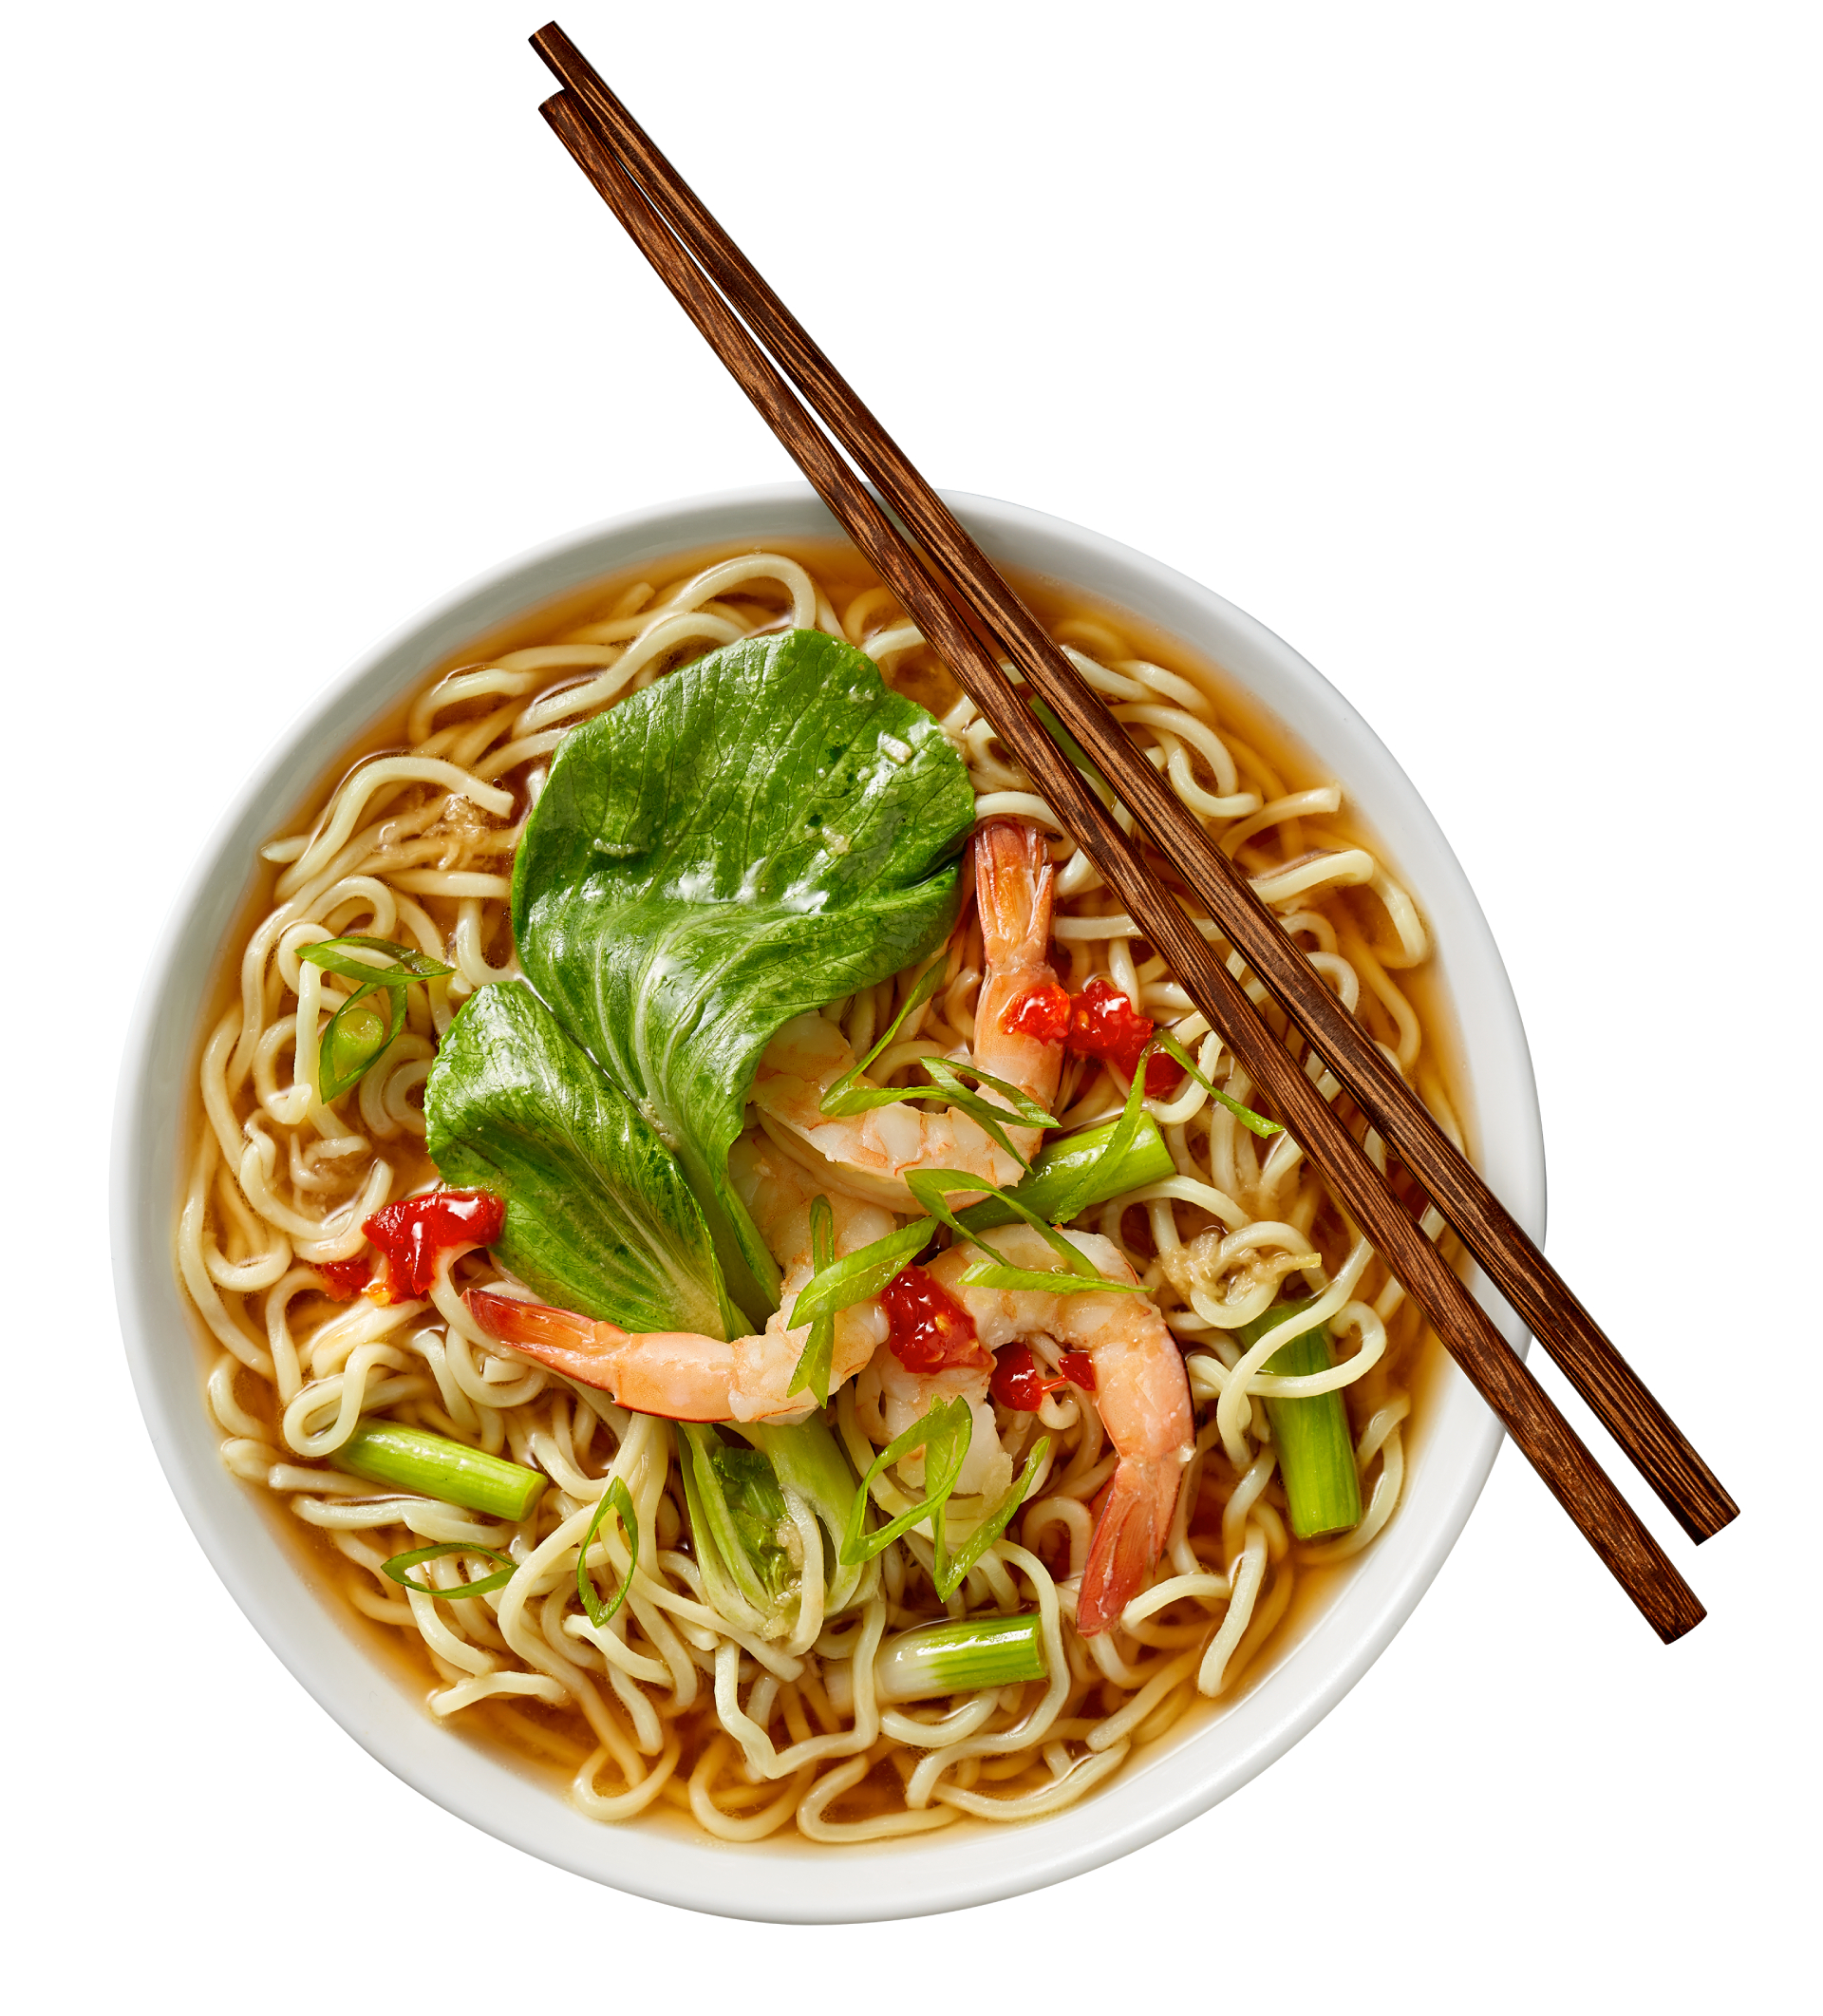 Wokka Noodles Recipes - Prawn Ramen Noodle Soup Image 2